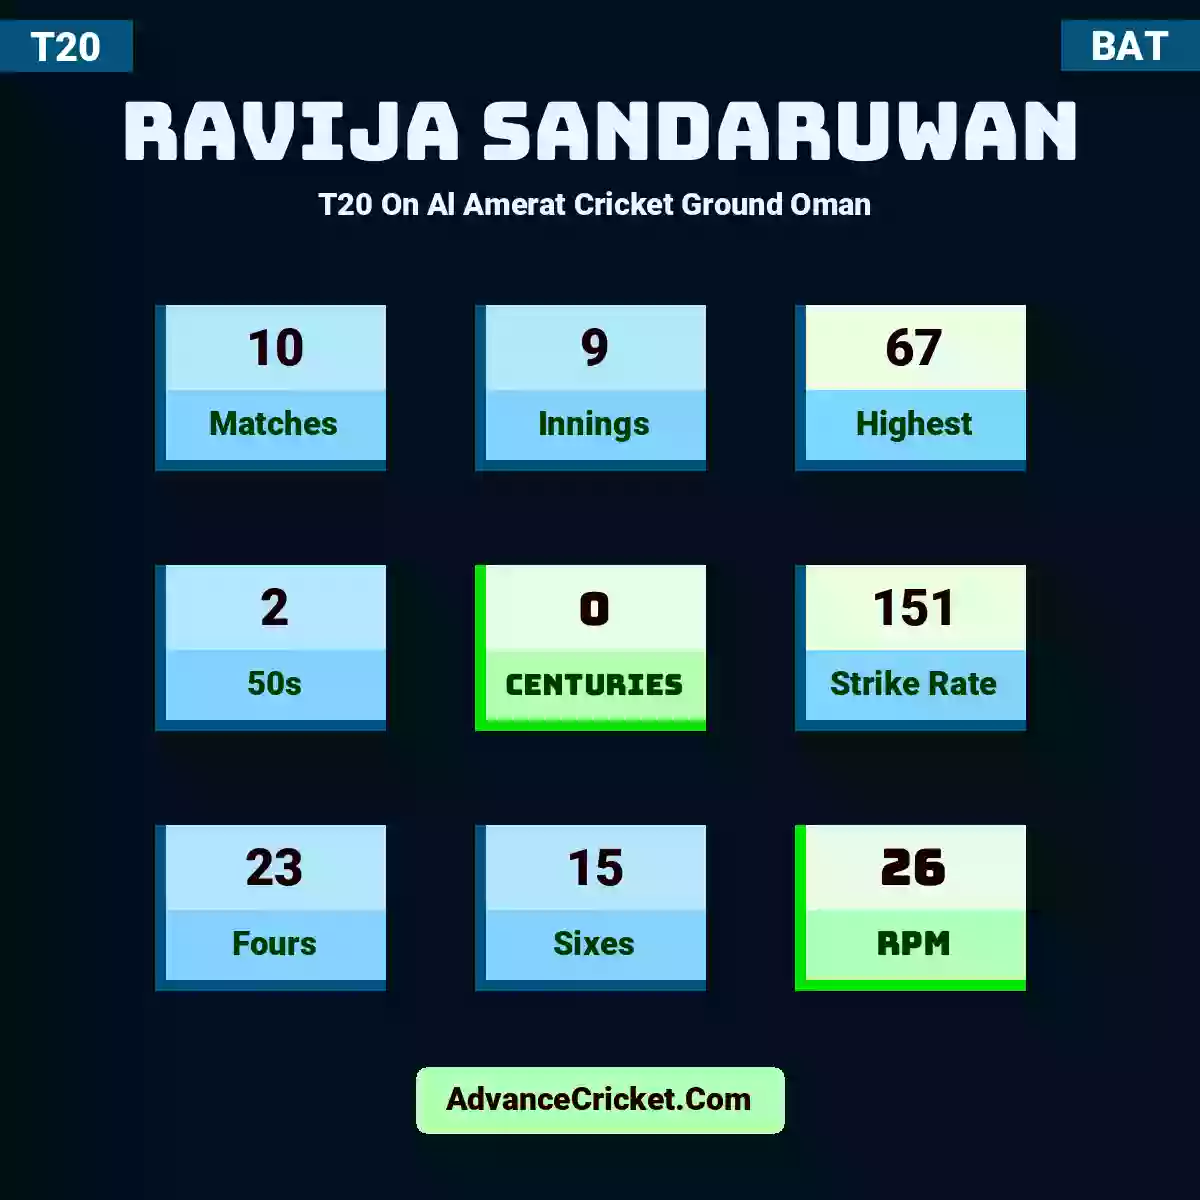 Ravija Sandaruwan T20  On Al Amerat Cricket Ground Oman , Ravija Sandaruwan played 10 matches, scored 67 runs as highest, 2 half-centuries, and 0 centuries, with a strike rate of 151. R.Sandaruwan hit 23 fours and 15 sixes, with an RPM of 26.